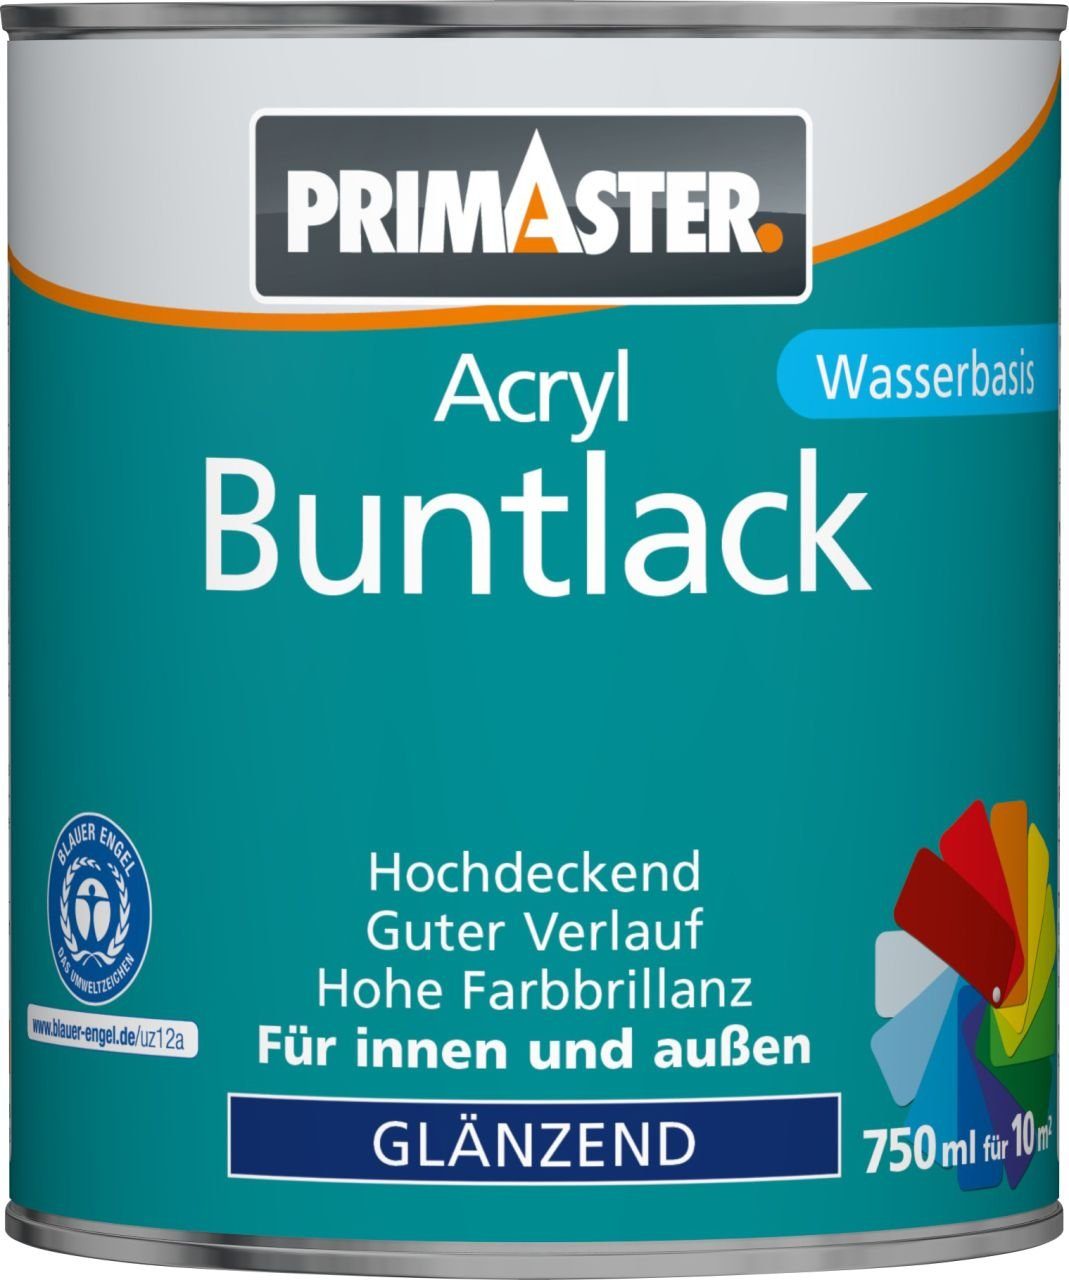 Primaster Acryl-Buntlack Primaster Acryl Buntlack RAL 8017 750 ml